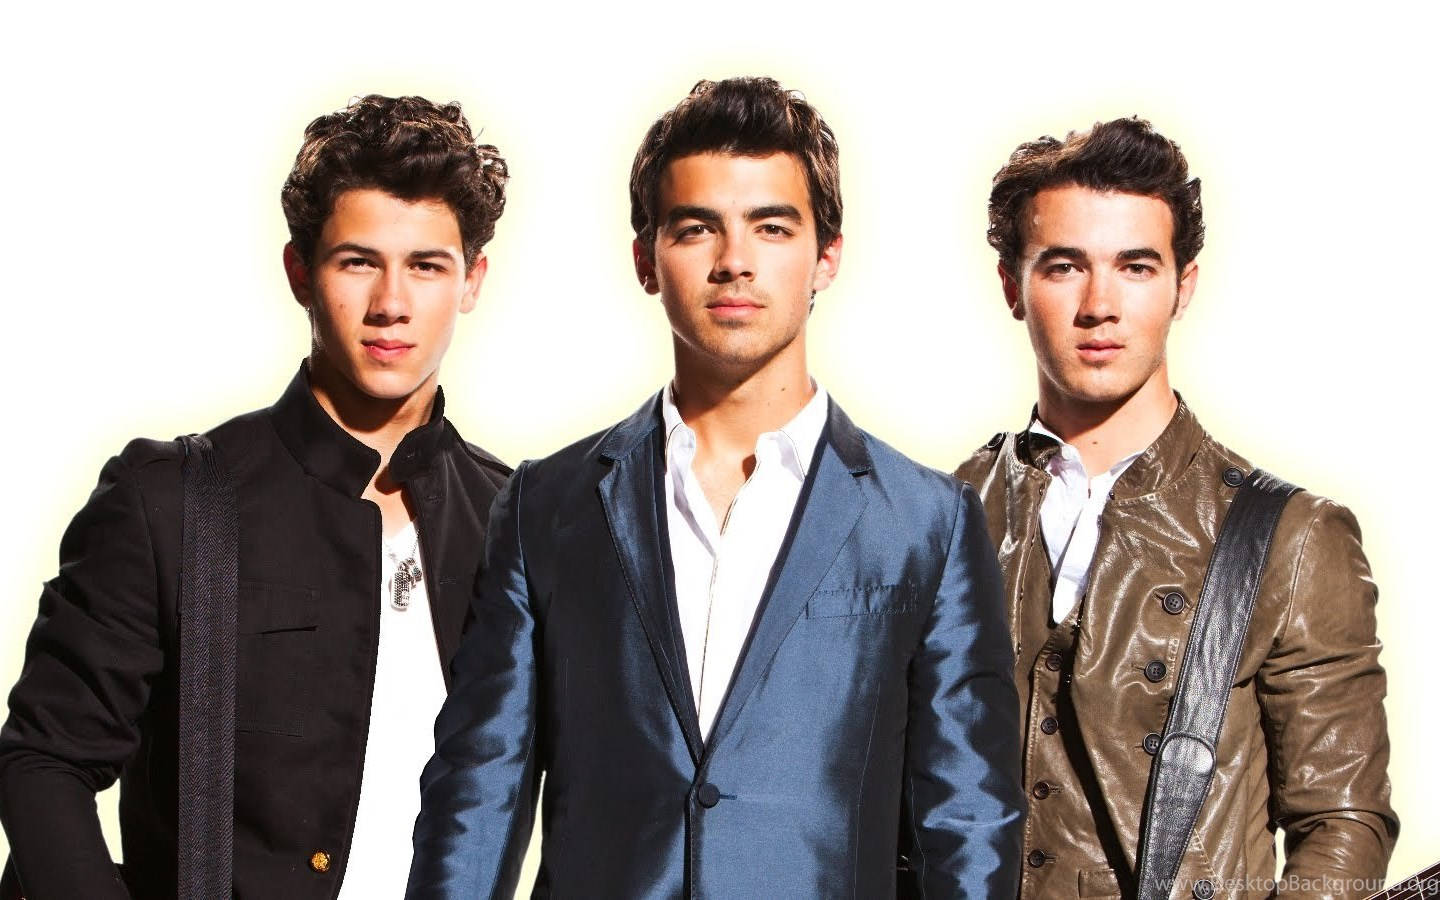 Jonas Brothers 2010 Tour Background